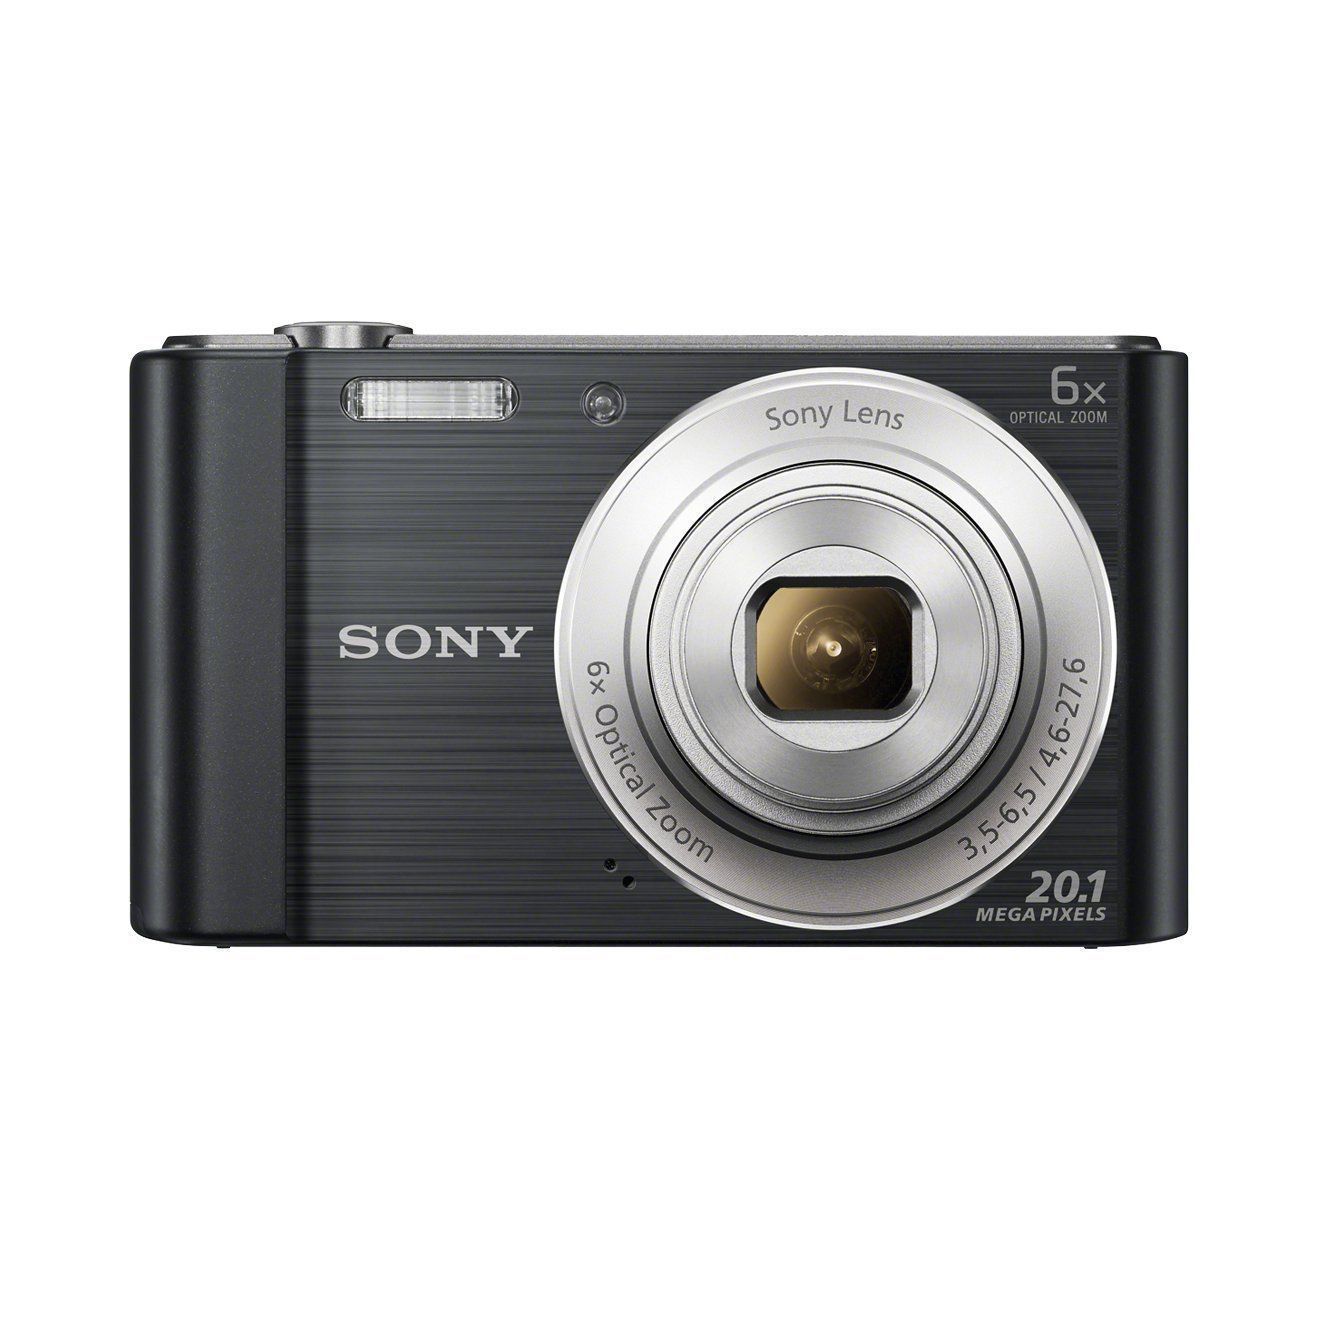 Sony W810 Compact Camera mit CCD-Sensor 20.1MP Built-in Flash 6x Optischer Zoom 